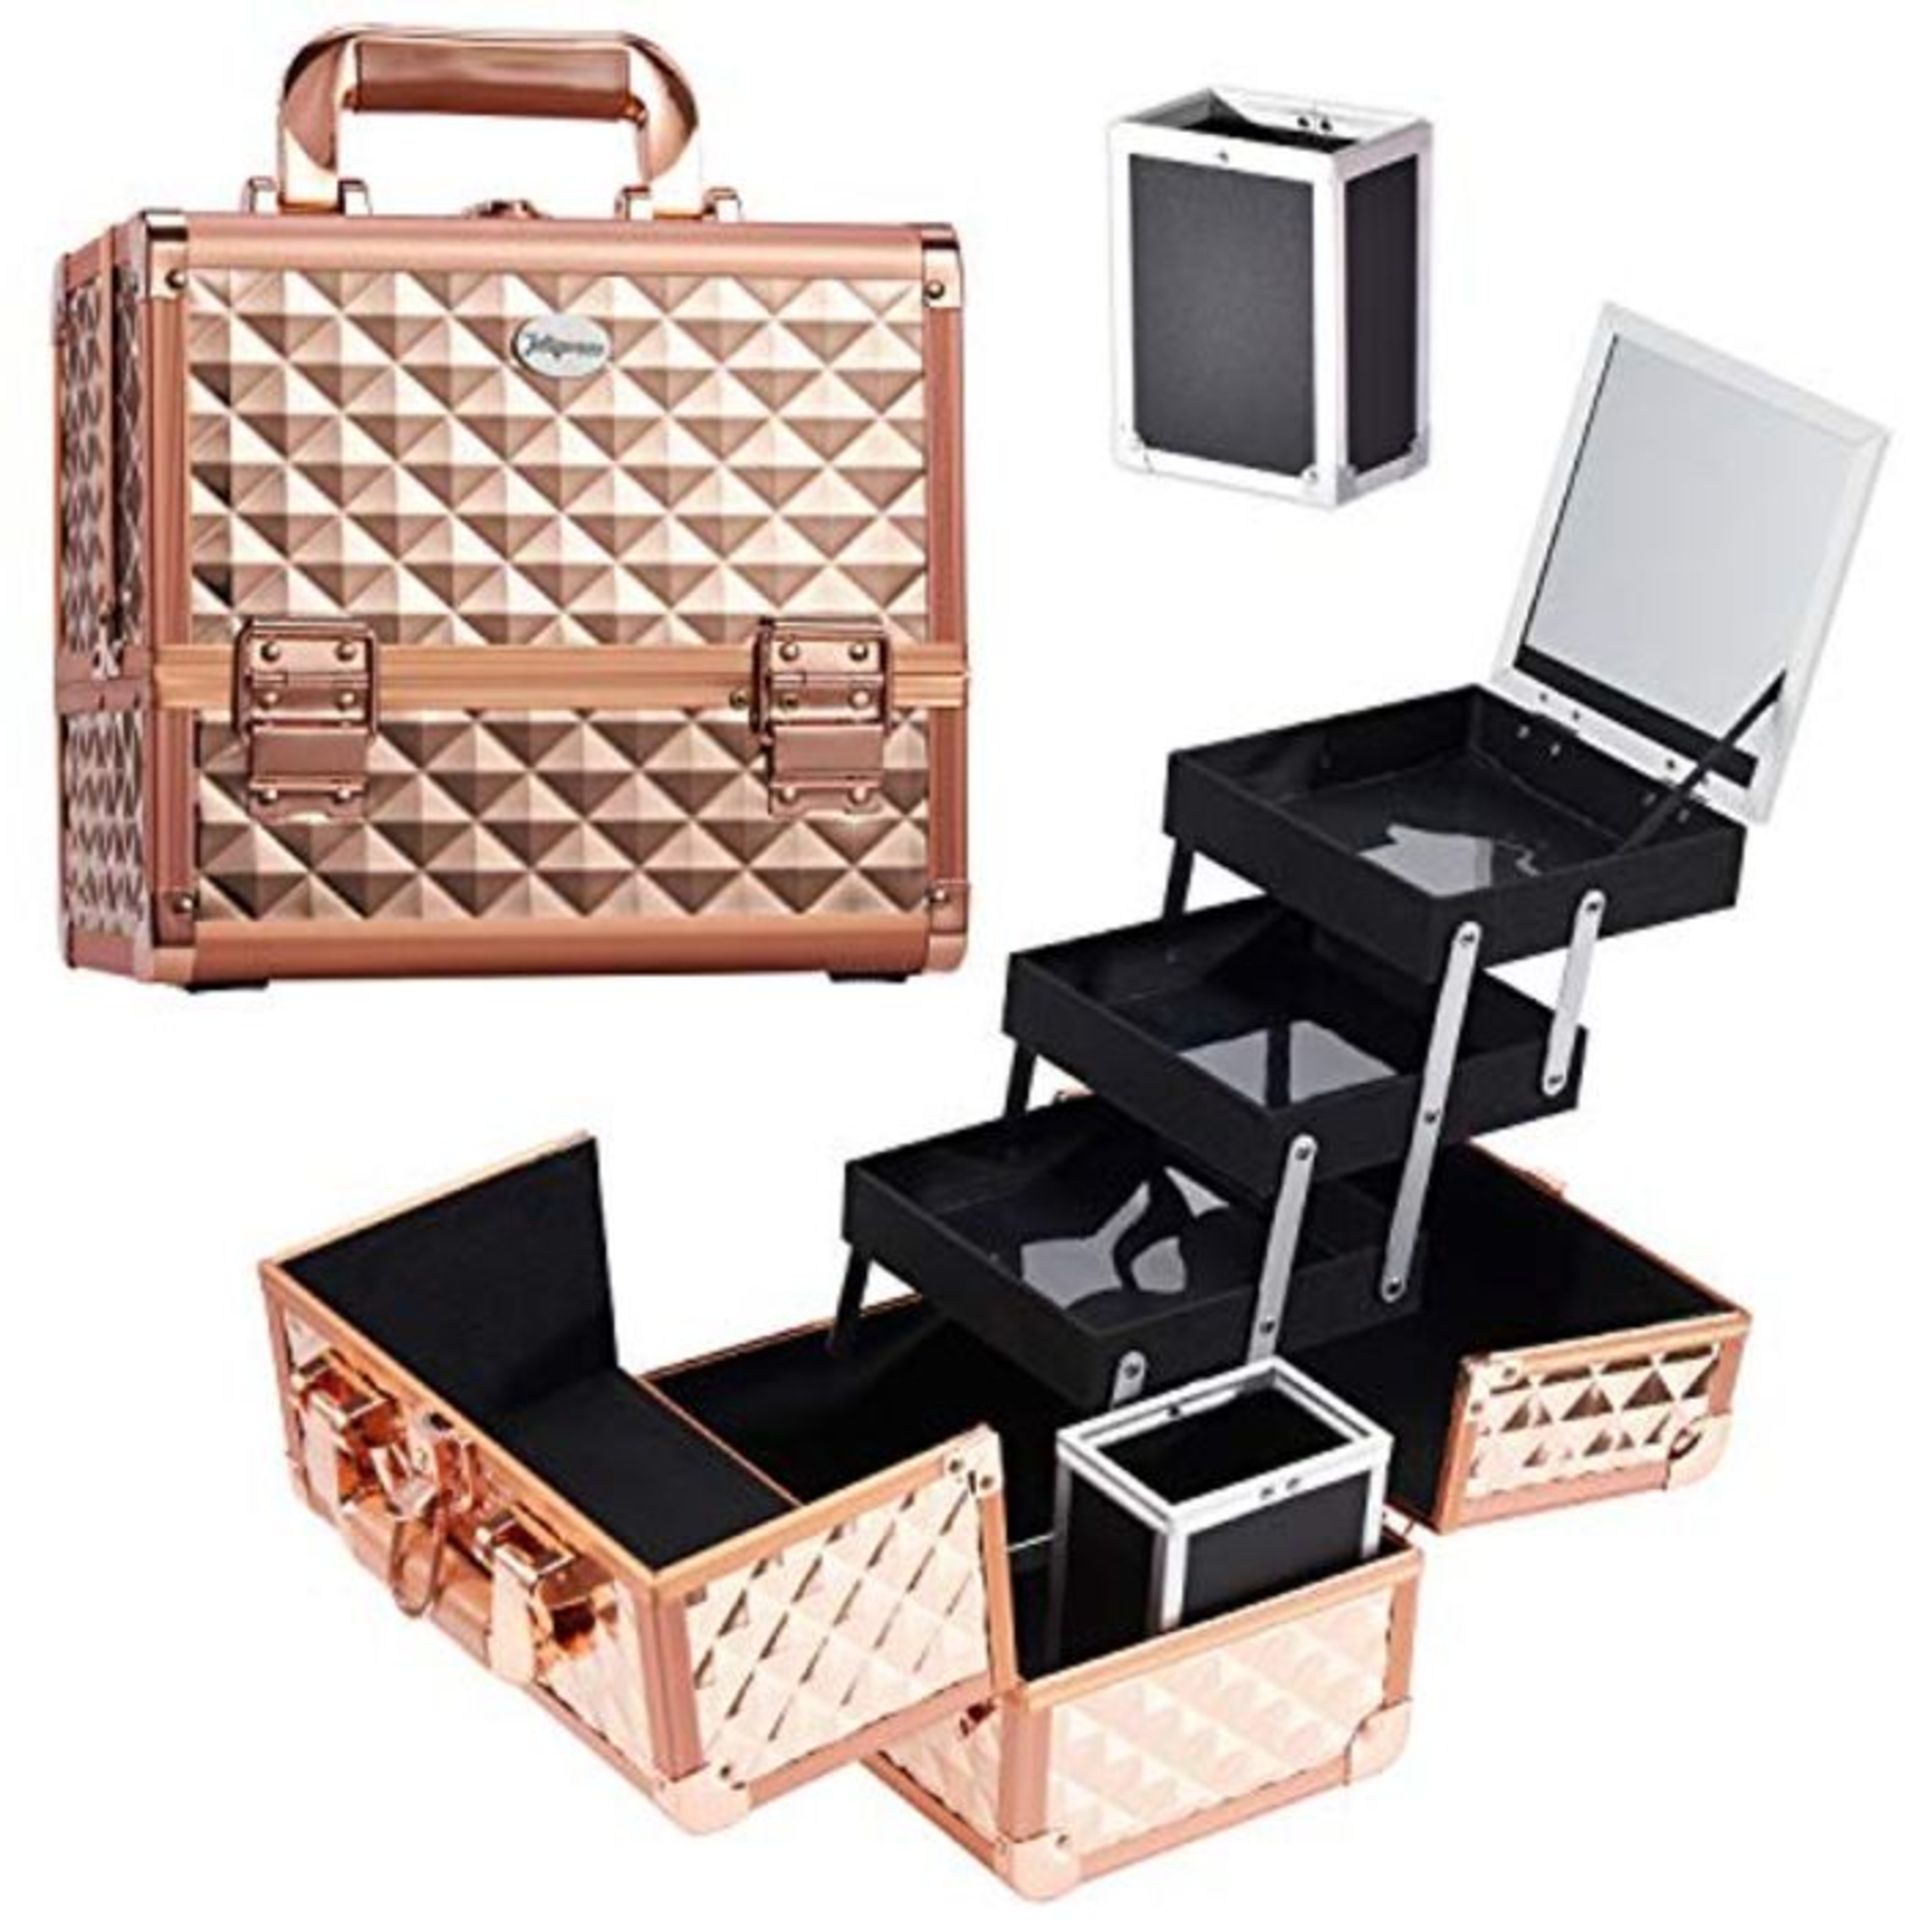 Joligrace Makeup Box Cosmetics Case Jewelry Organiser Vanity Make Up Storage Boxes wit